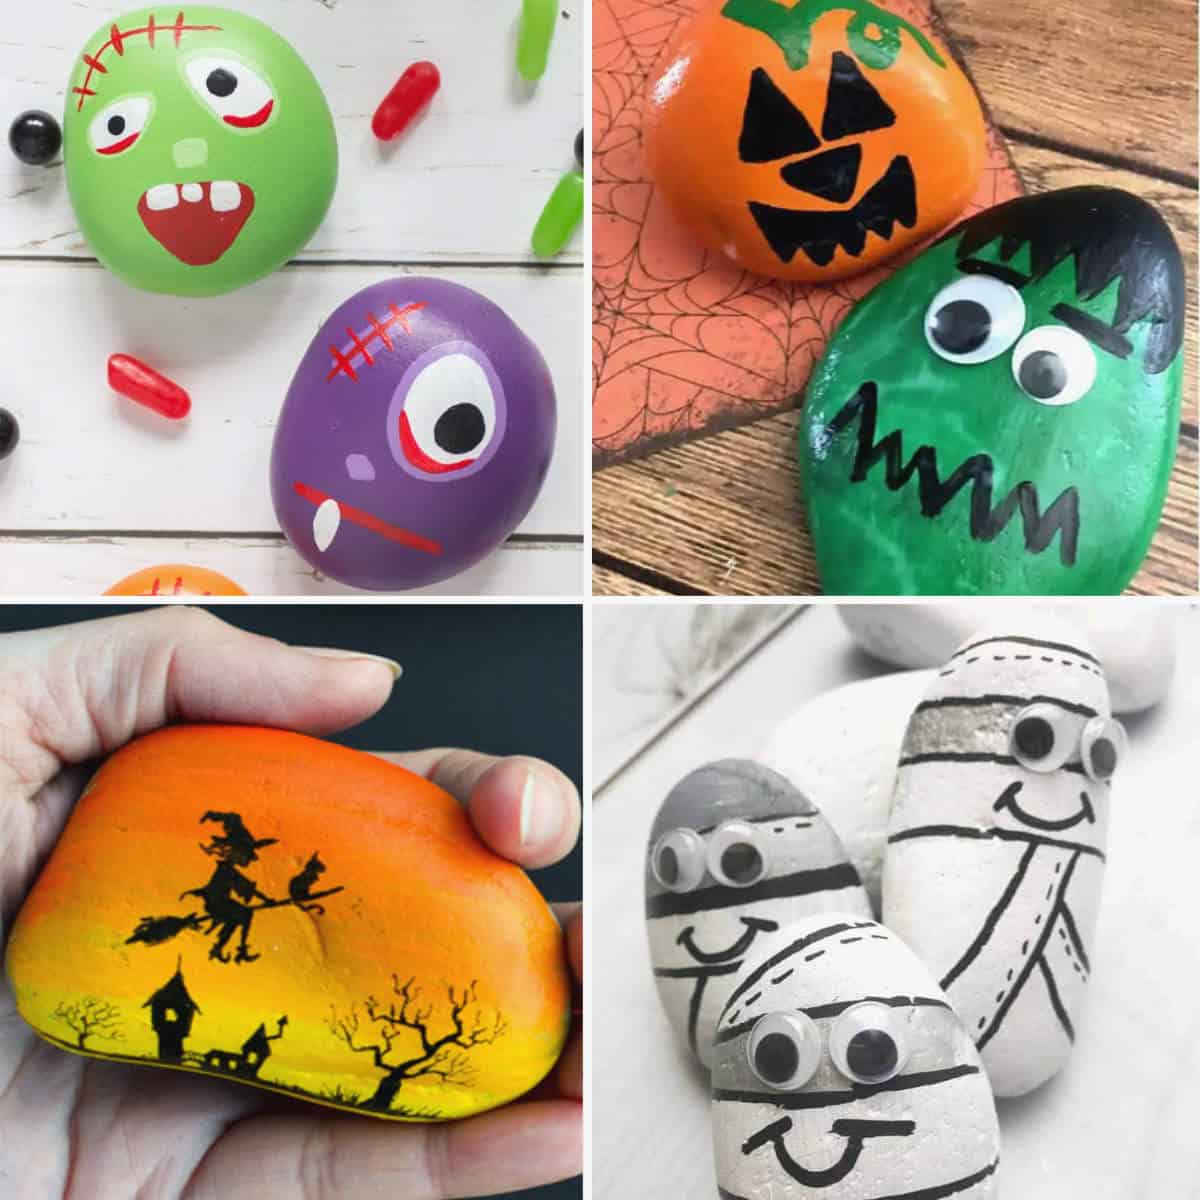 17 Halloween Rock Painting Ideas –With Tutorials!